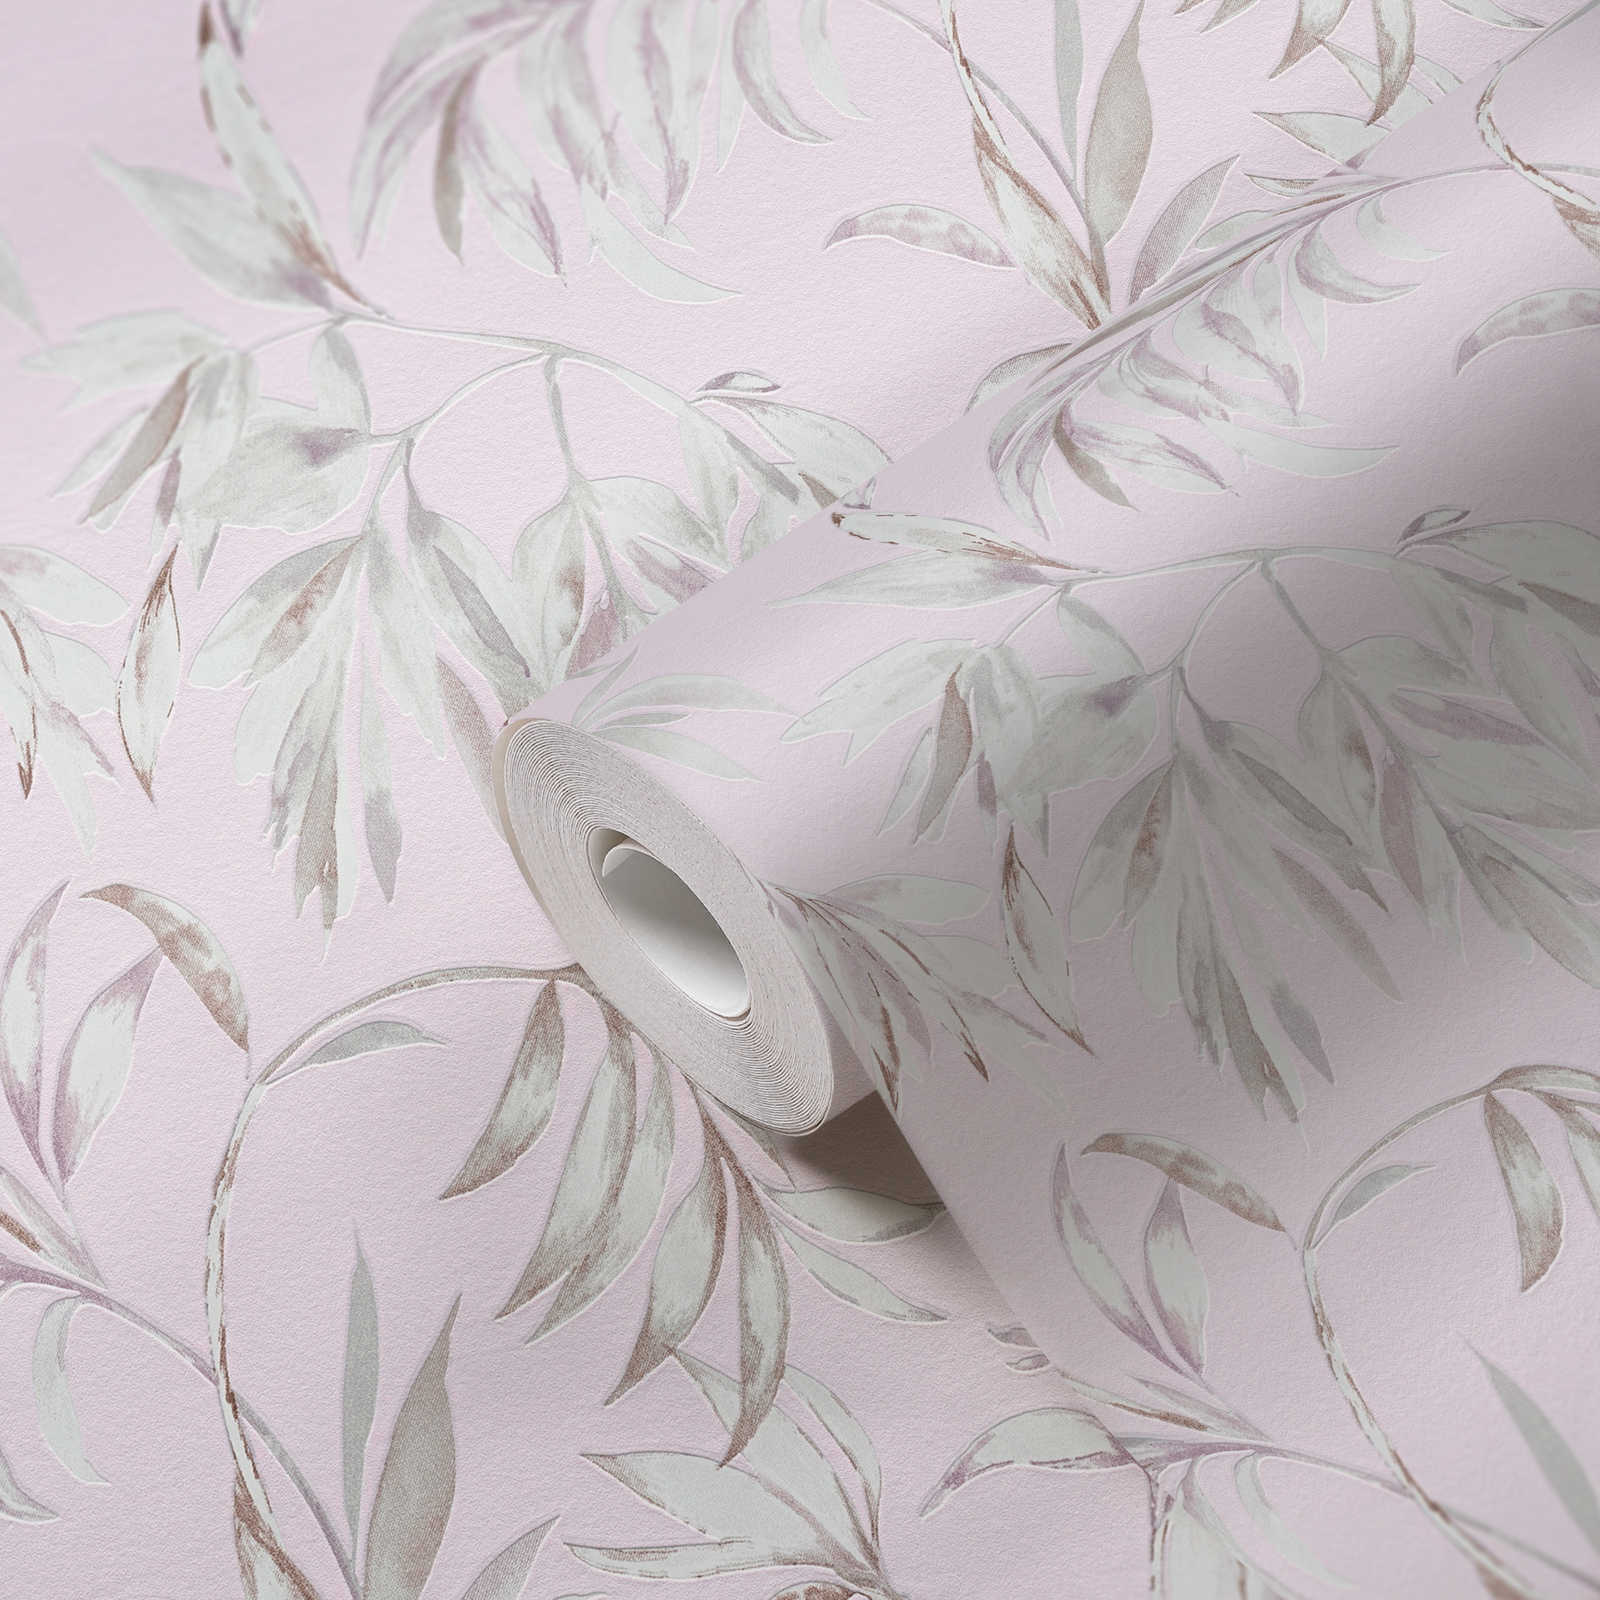             Blätter Tapete Rosa Design im Aquarell Stil – Violett
        